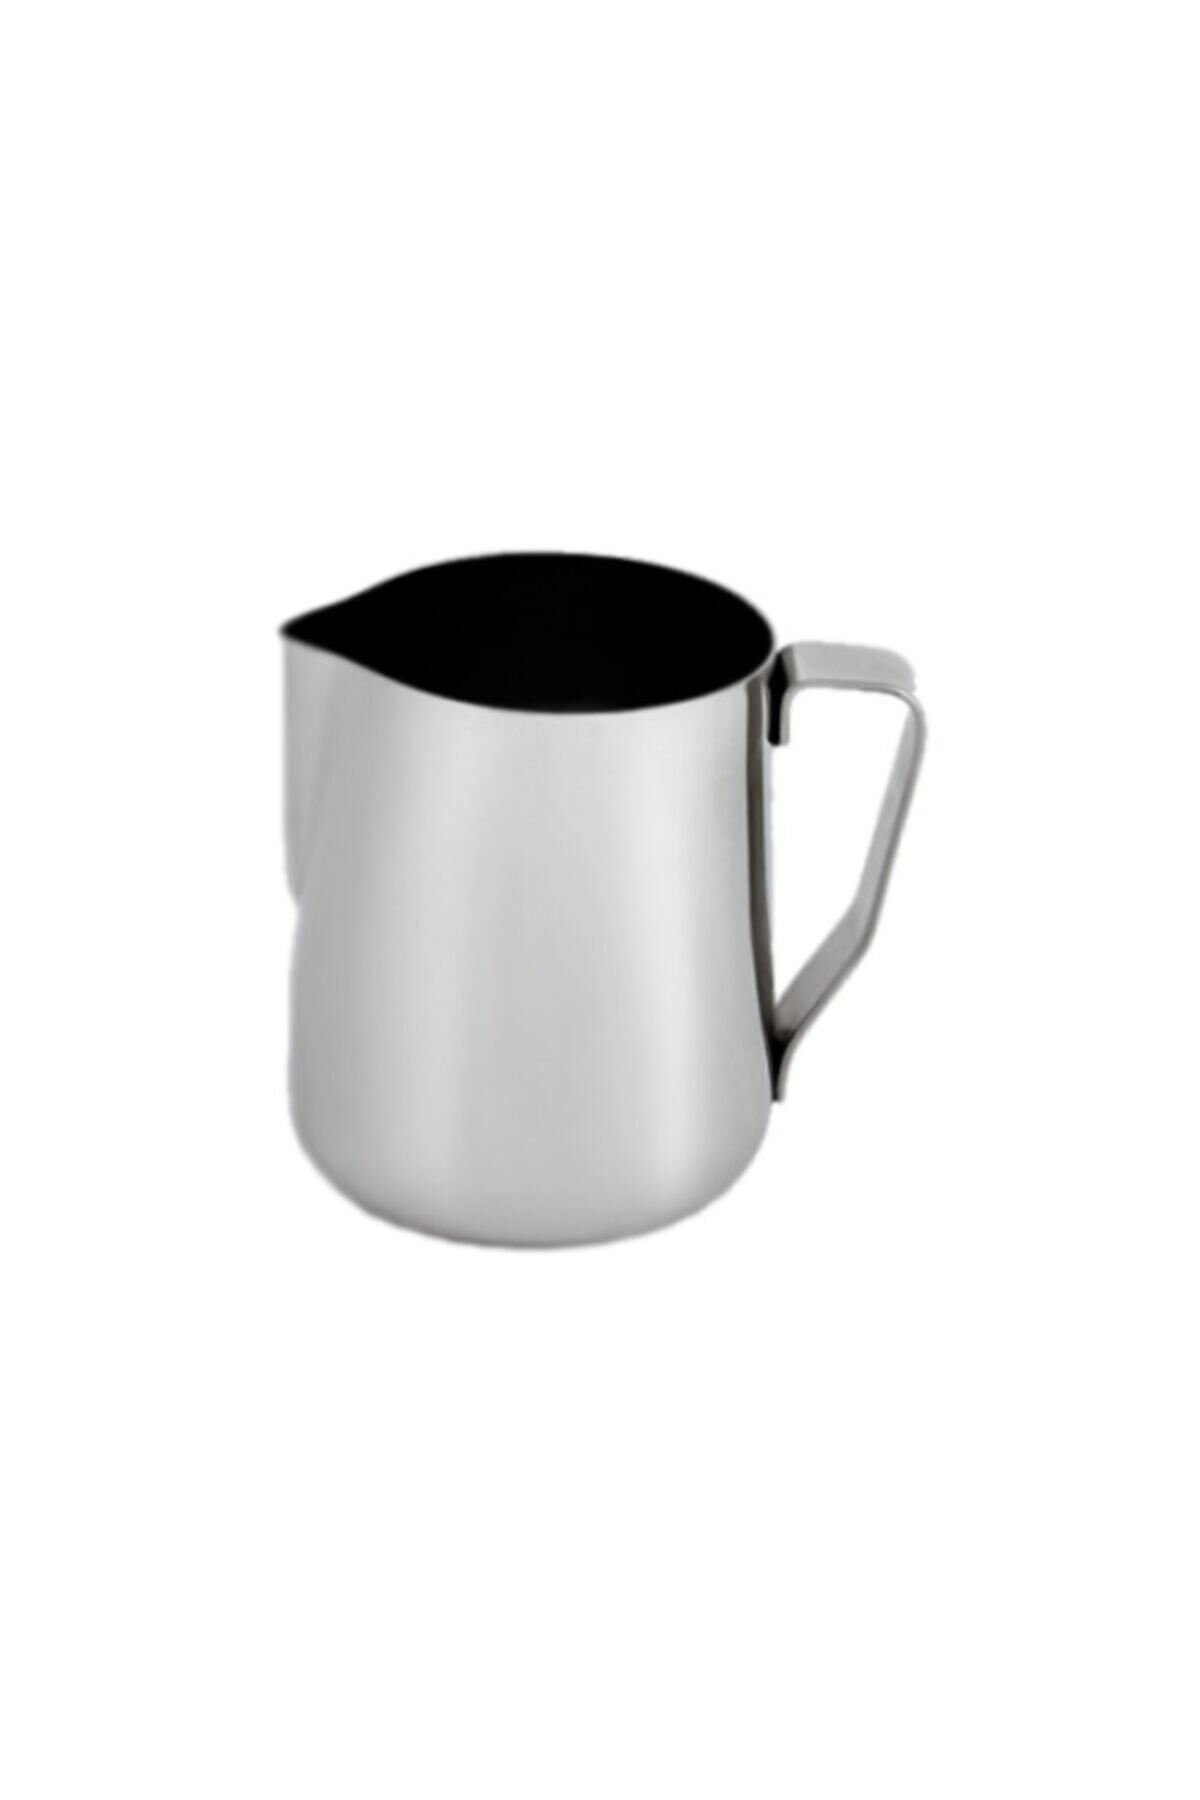 Palex Paslanmaz Çelik Kahve Süt Potu Kapaksız (Pitcher) 300 ml.